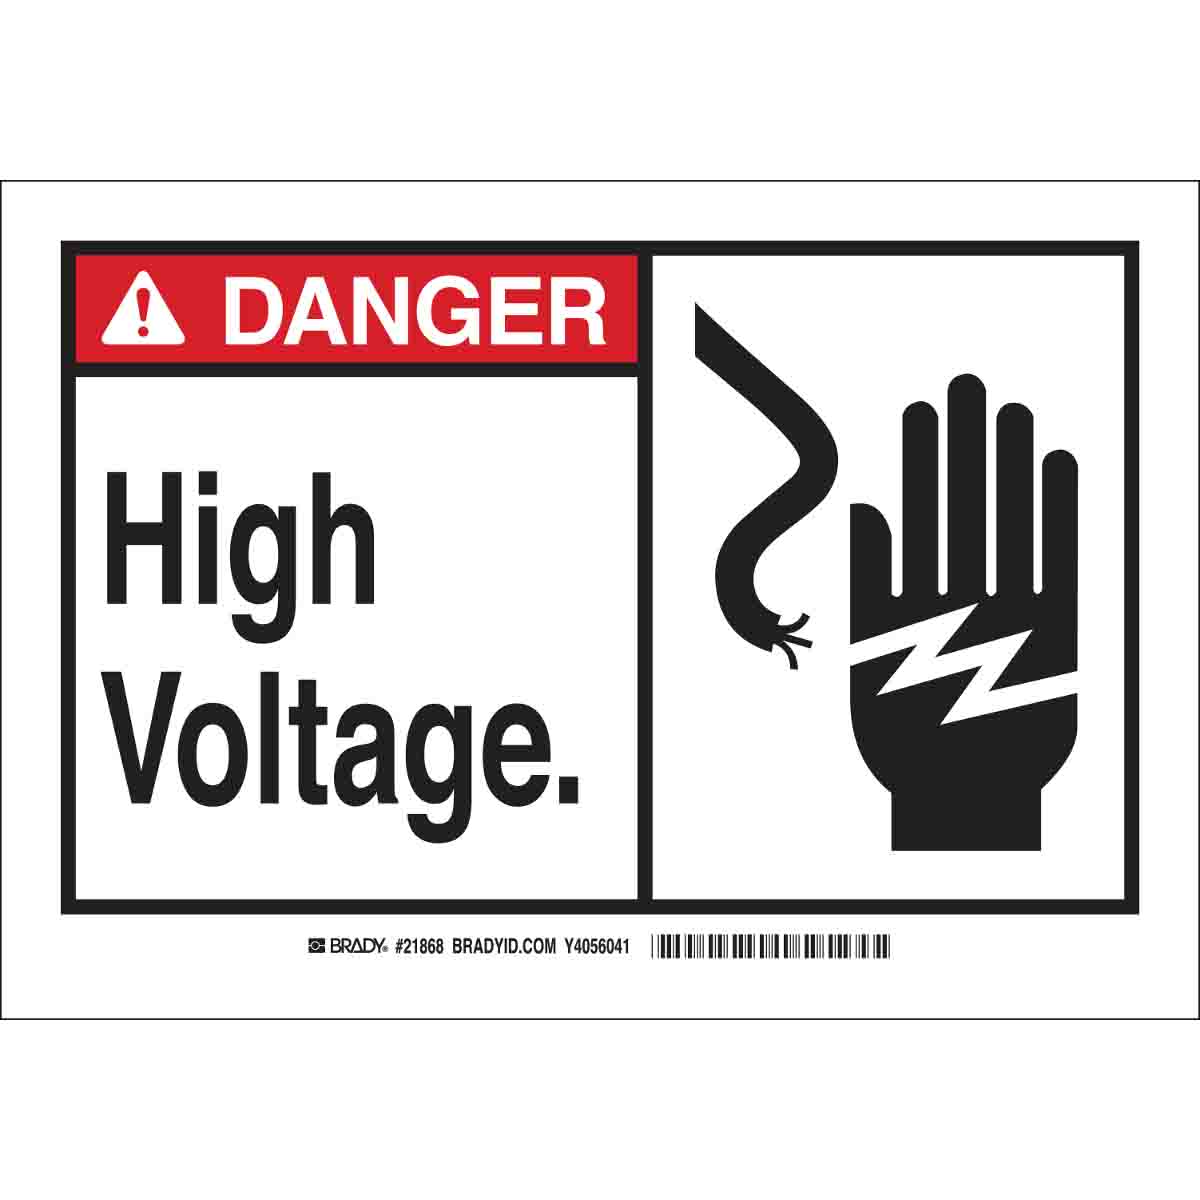 High Voltage 10 X 7 Danger Sign Legend W/Picto Brady 59384 Aluminum 